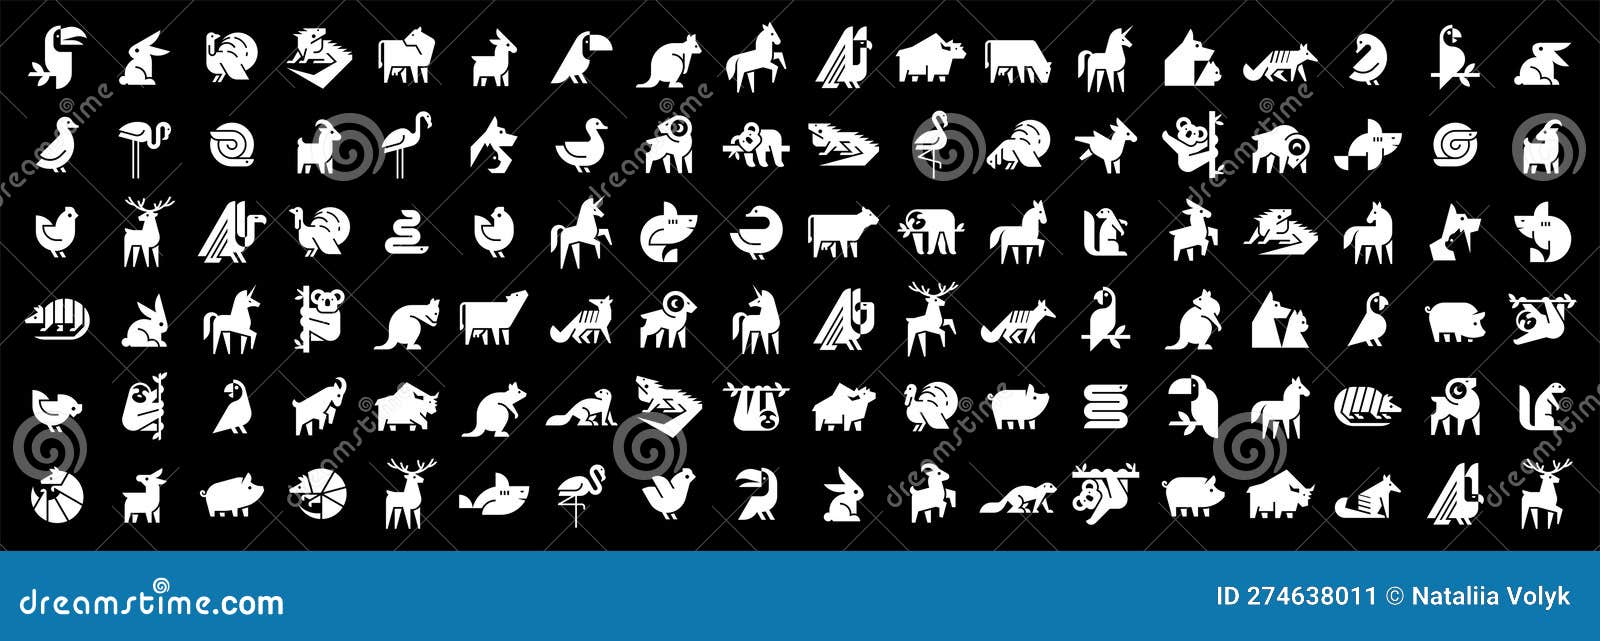 animals logos collection